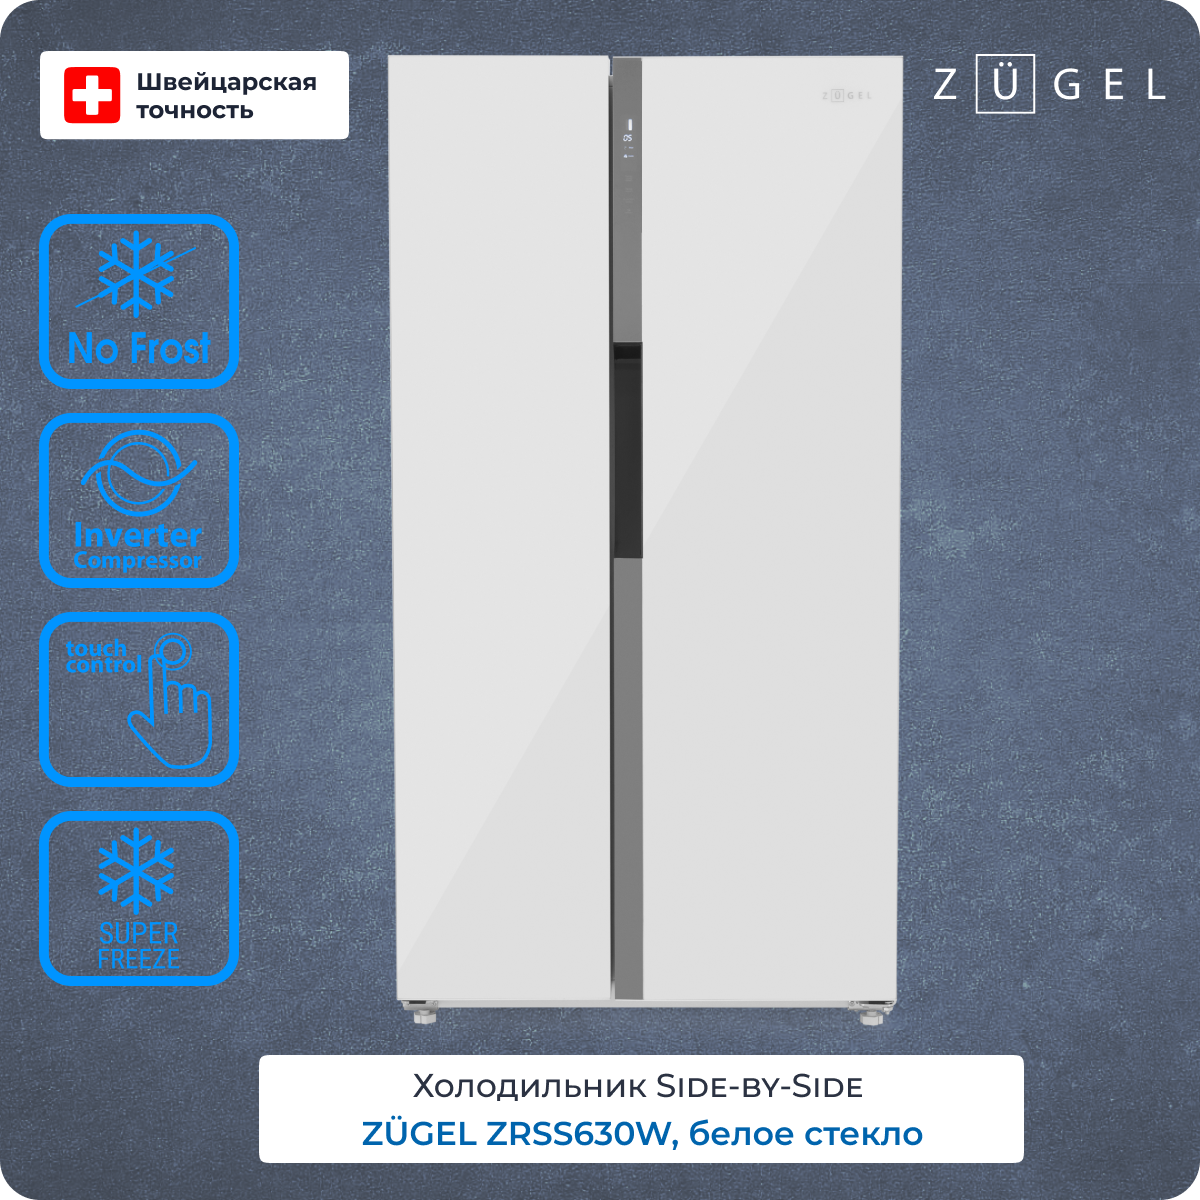 Холодильник ZUGEL ZRSS630W белый дневник интуитивного питания